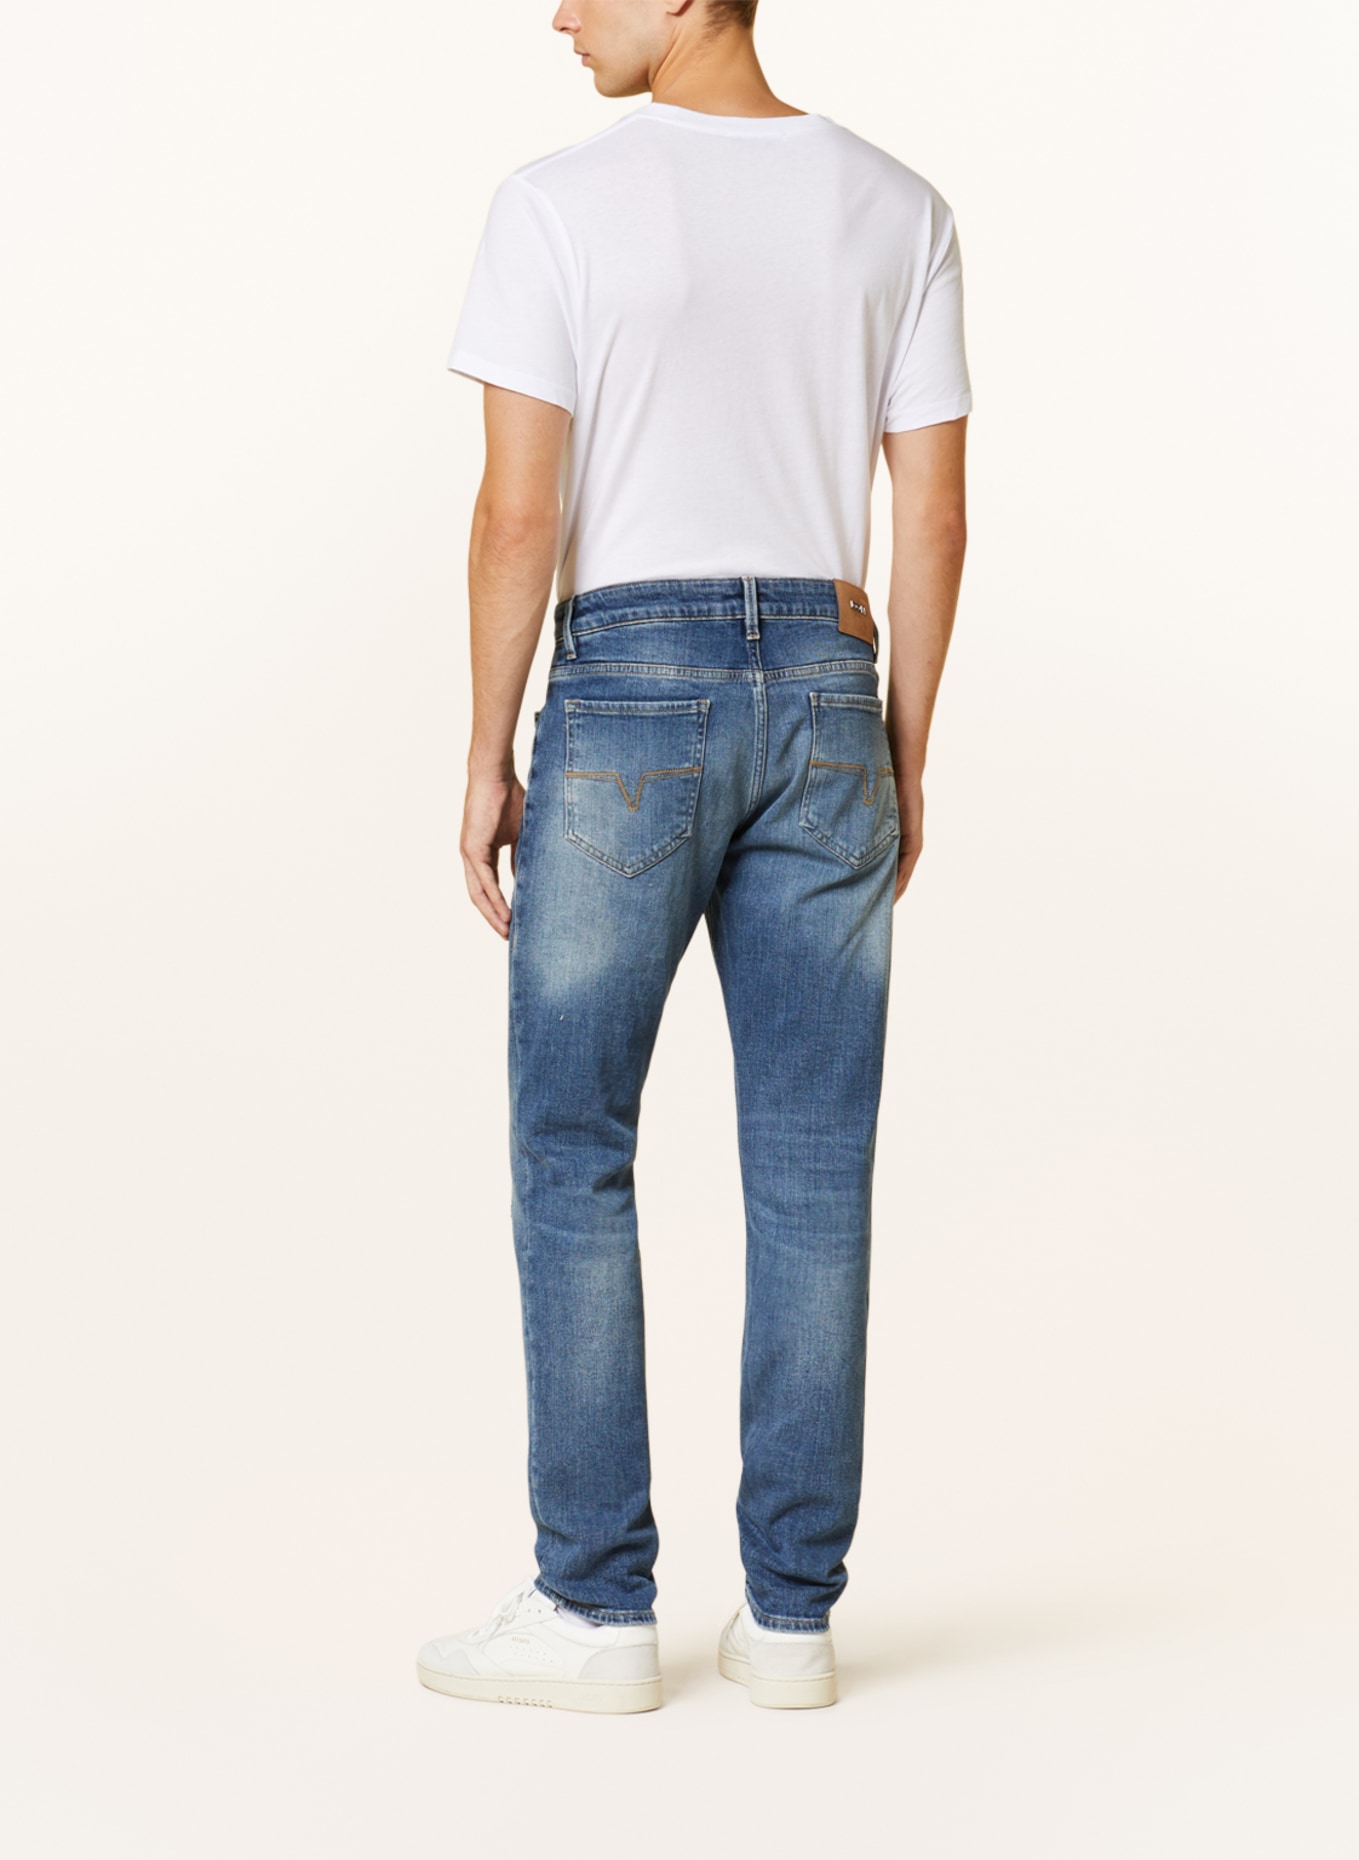 JOOP! JEANS Jeans STEPHEN Slim Fit, Farbe: 422 Medium Blue                422 (Bild 3)